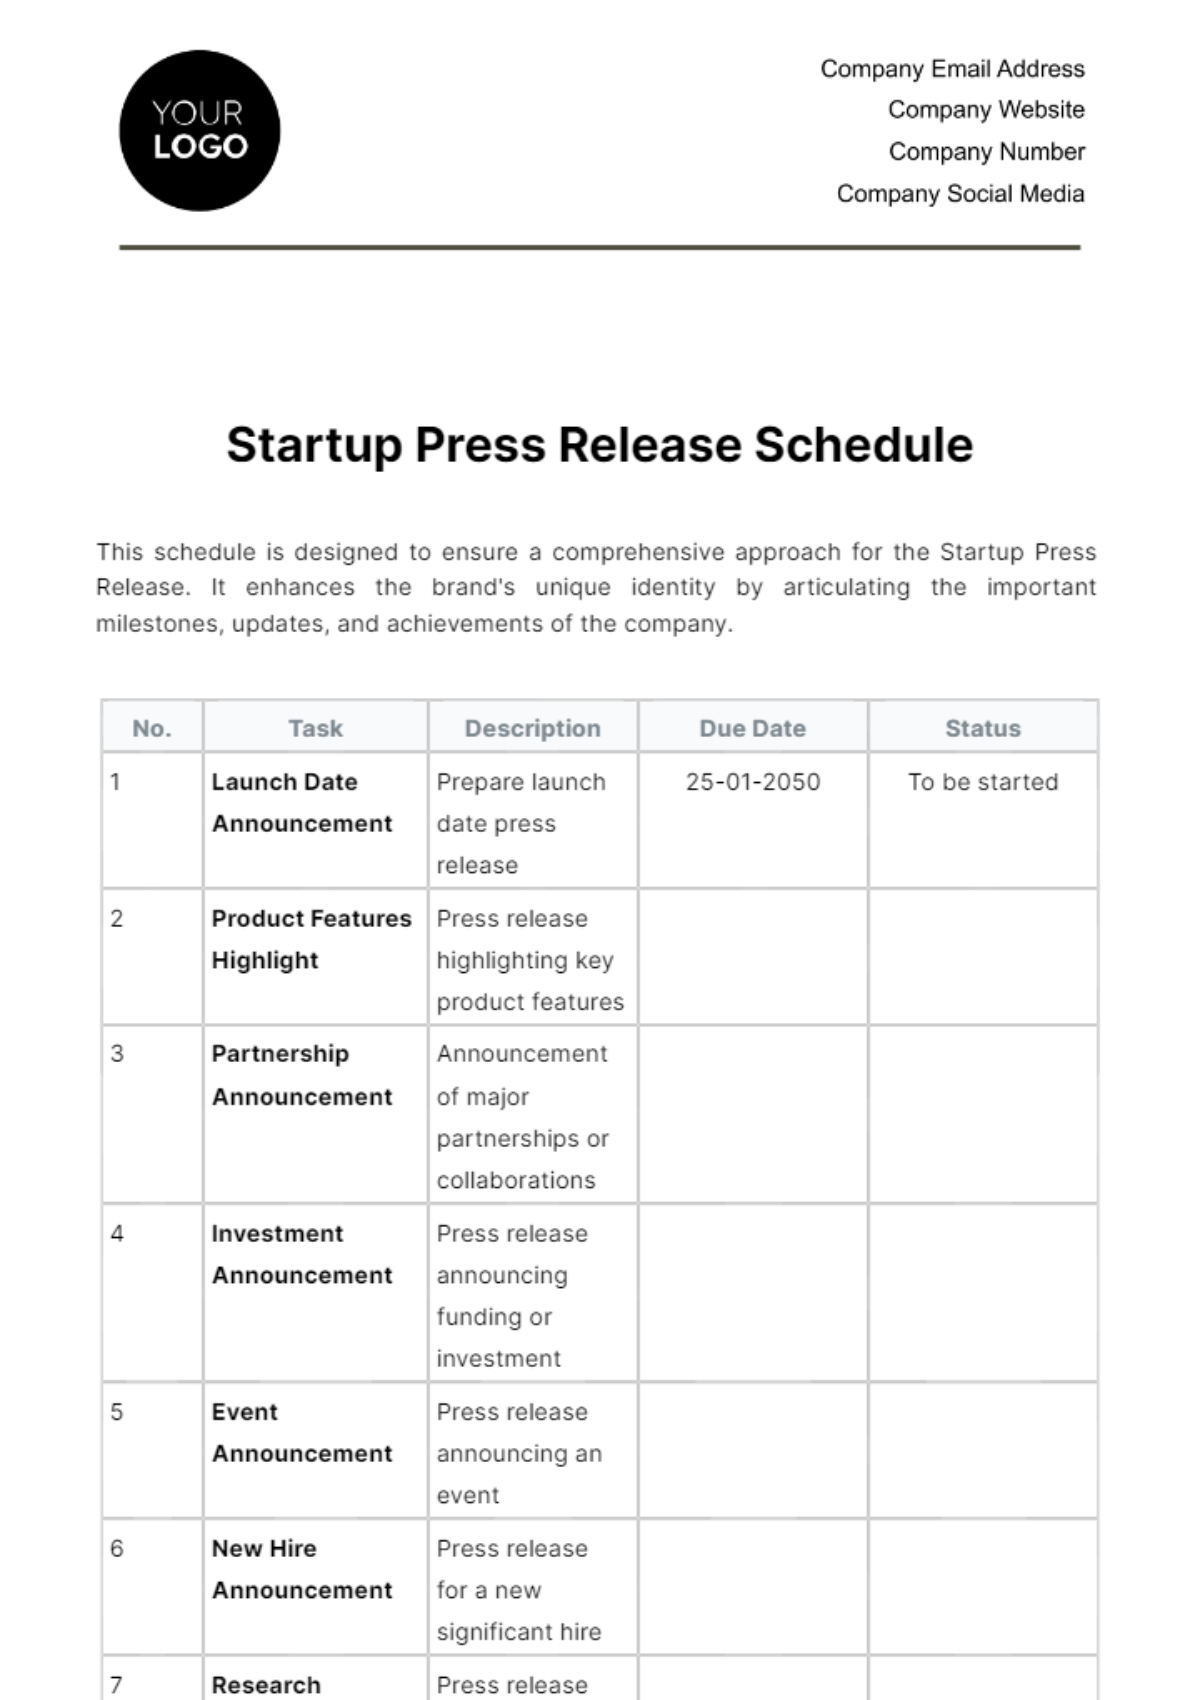 Startup Press Release Schedule Template